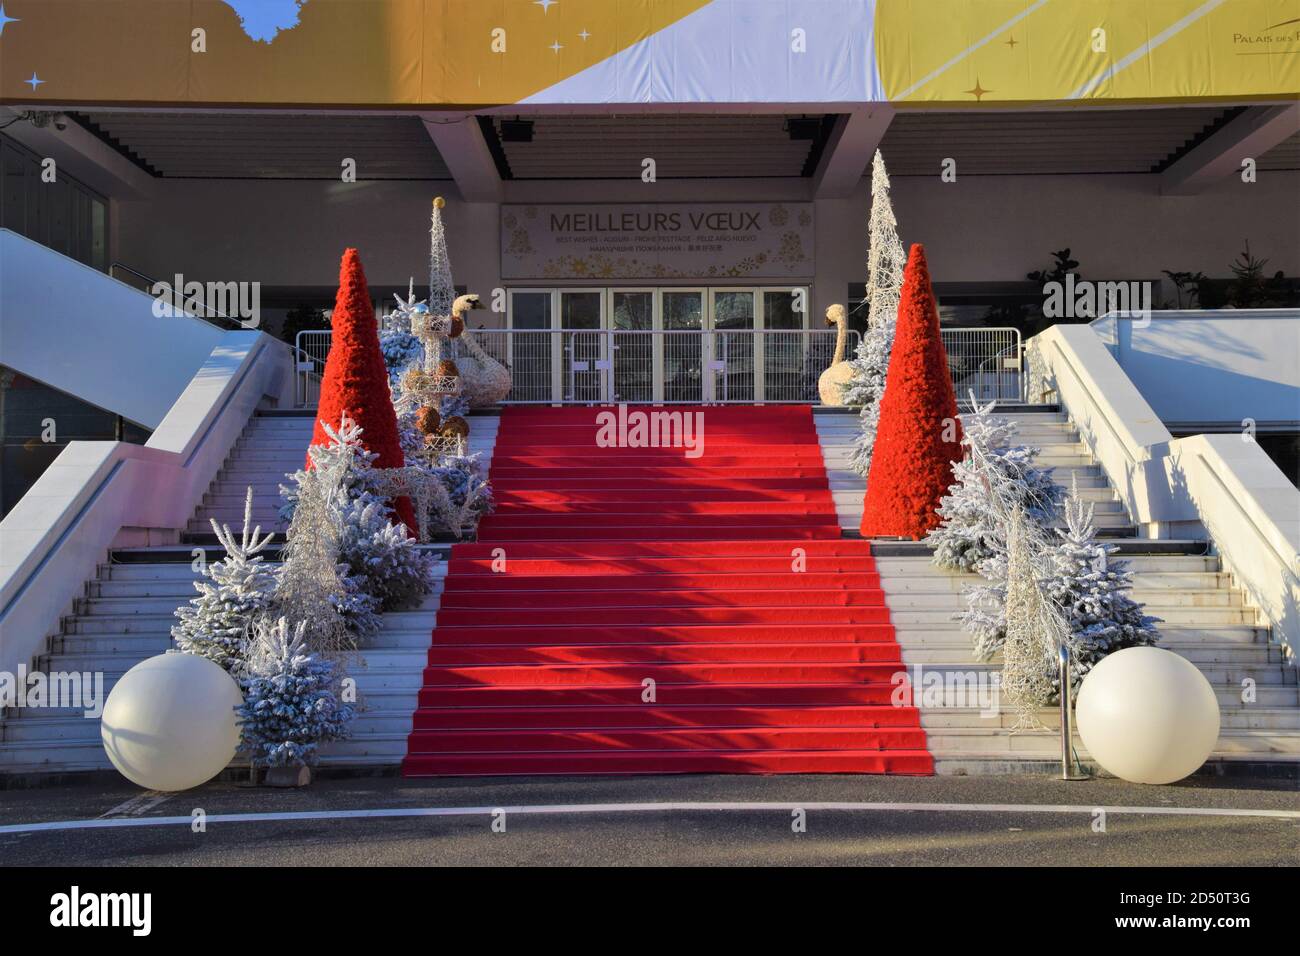 Red carpet with Christmas decorations, Palais des Festivals, Cannes, France Stock Photo